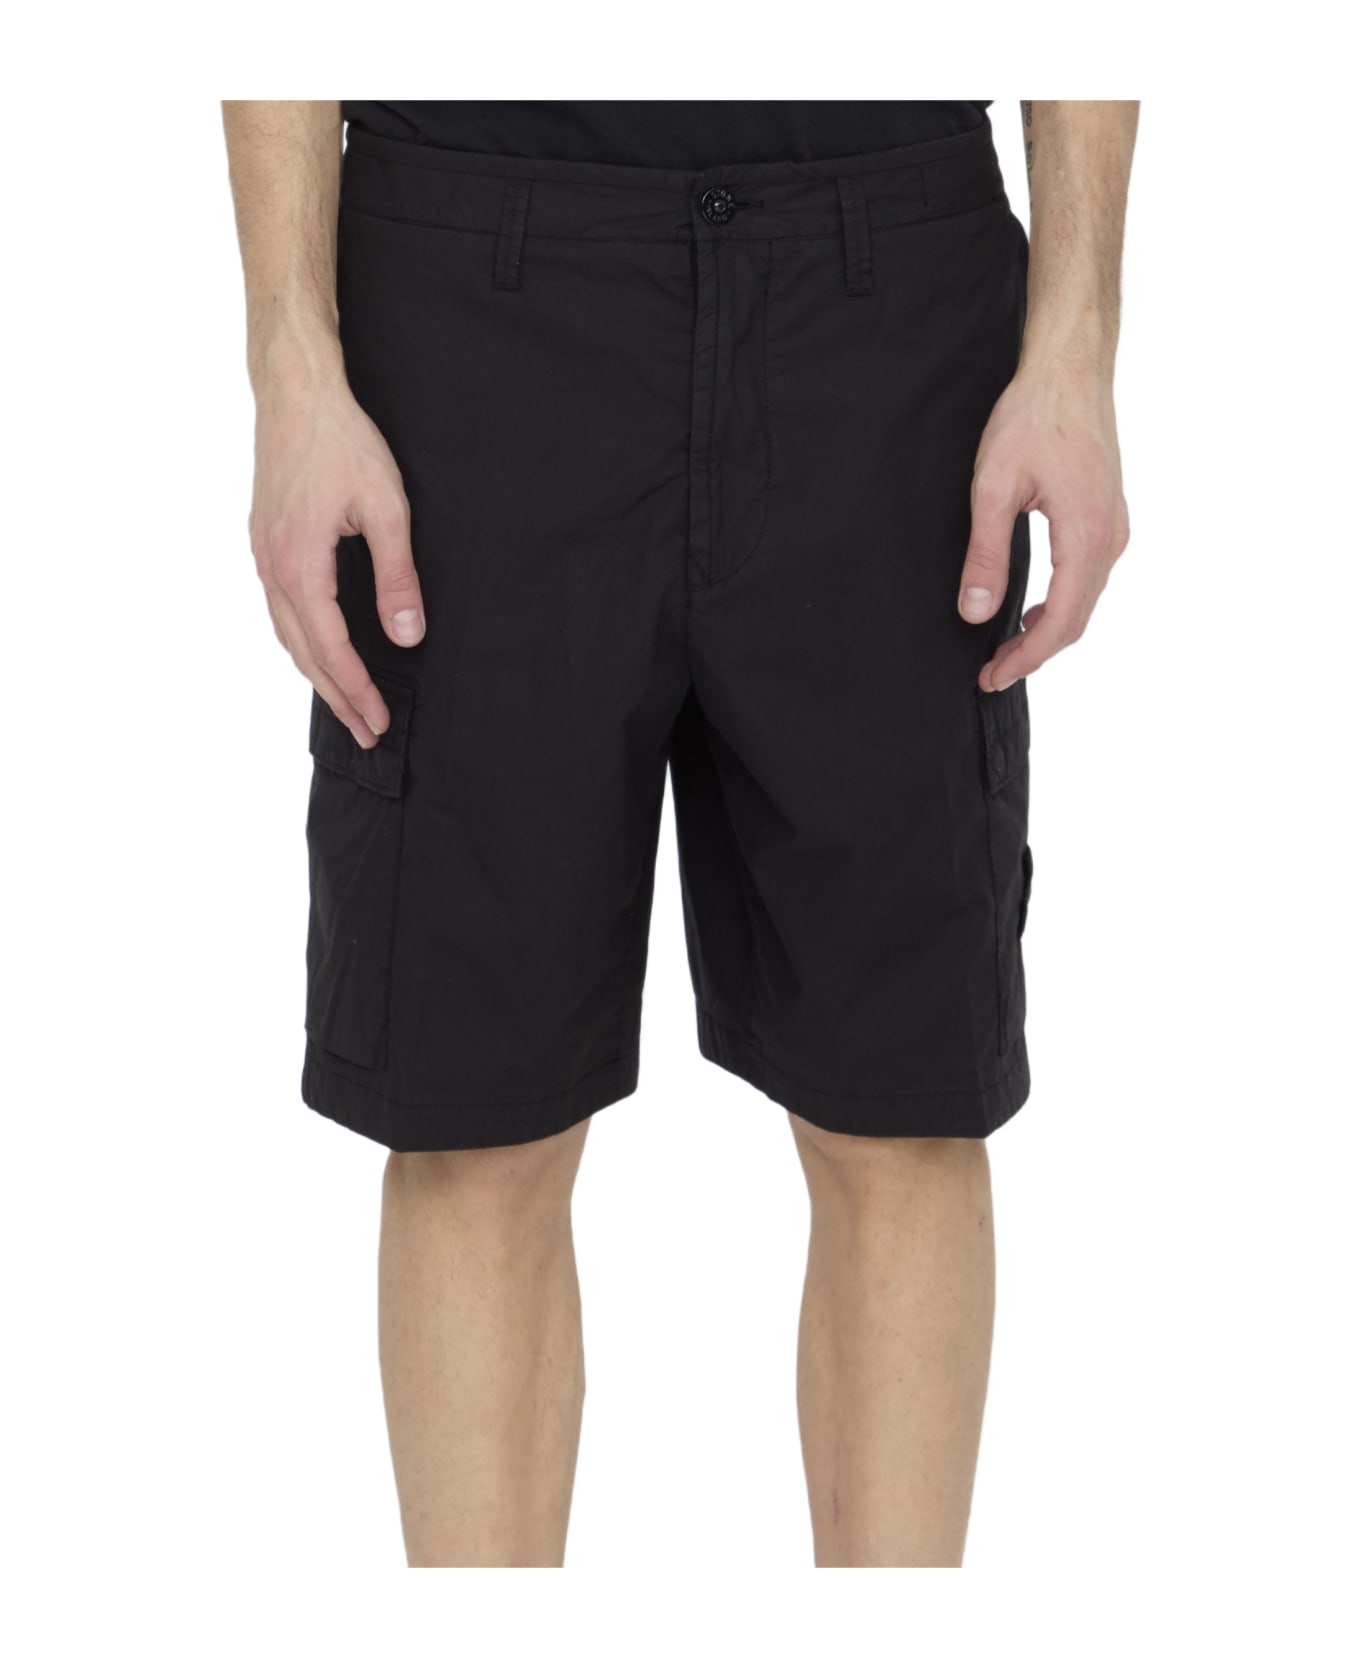 Stone Island Cargo Bermuda Shorts - Black